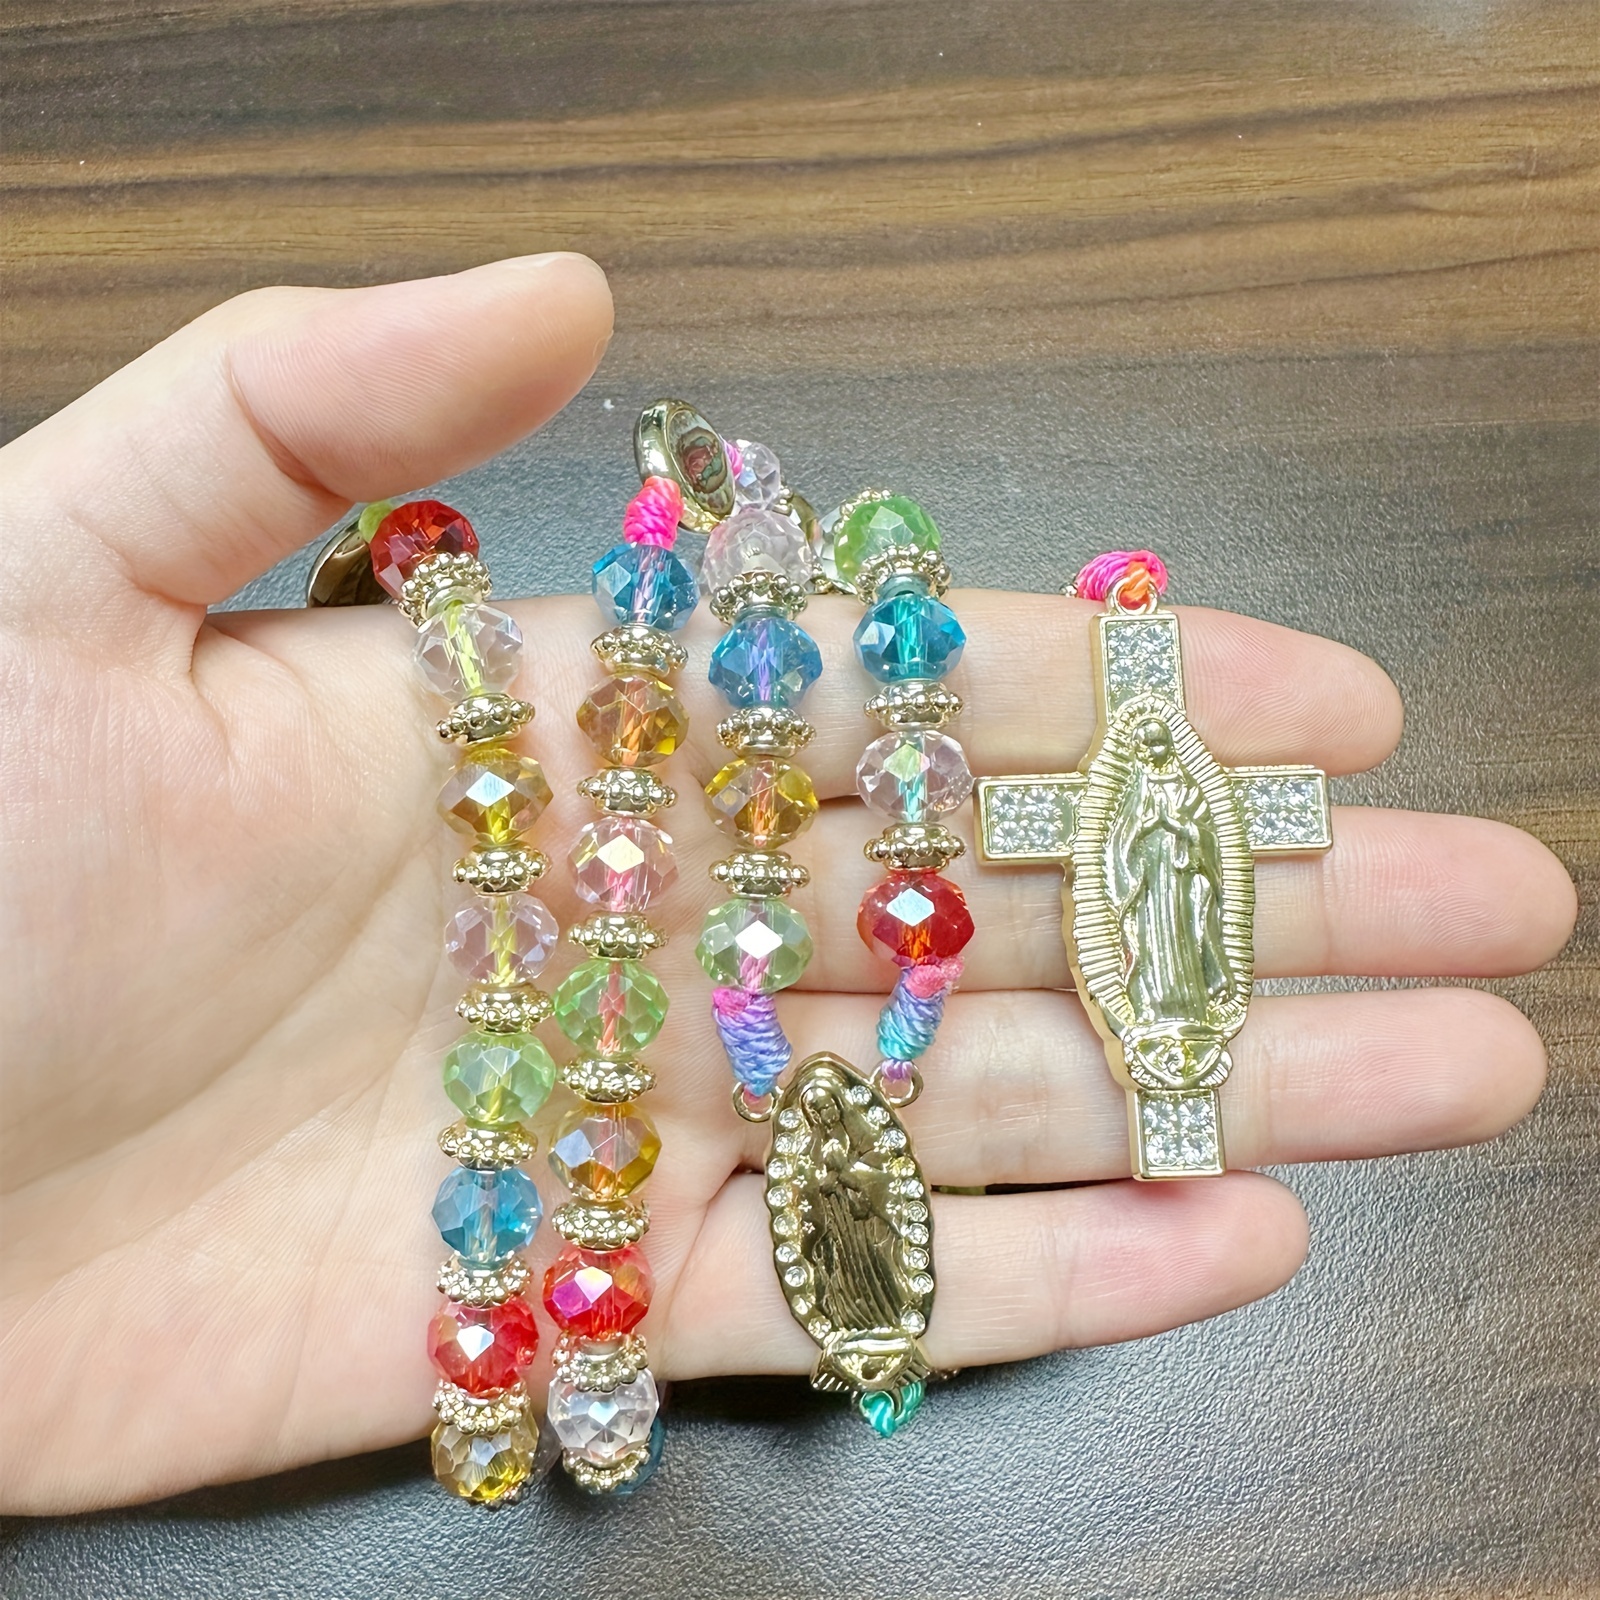 Mexican Catholic Saints Bracelet with Glass Beads